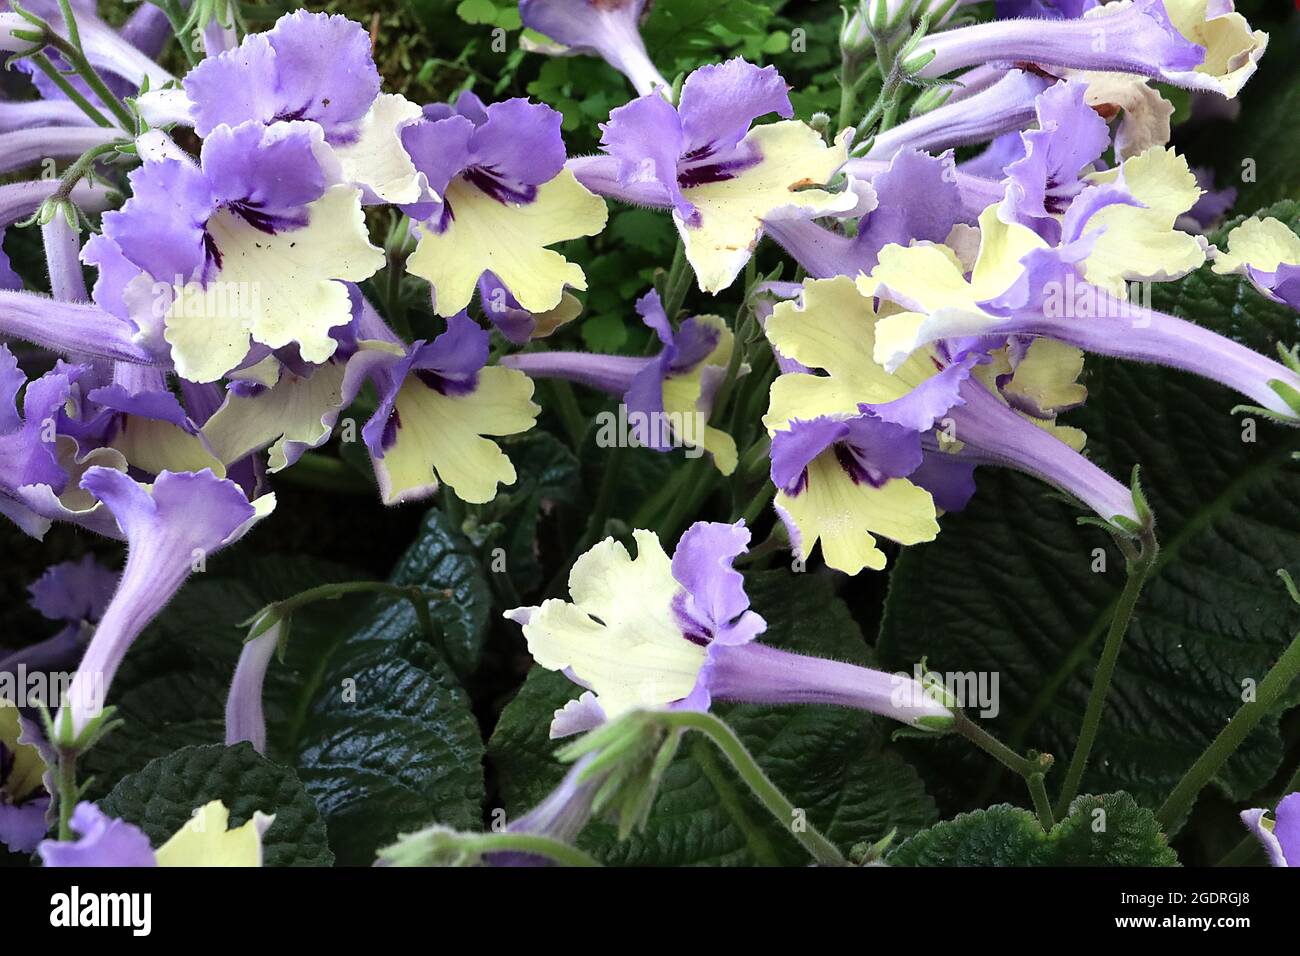 Streptocarpus ‘Harlequin Blue’ Cape primrose Harlequin Blue – violet blue flat-funnelled flowers, pale yellow throat with dark purple lateral stripes, Stock Photo